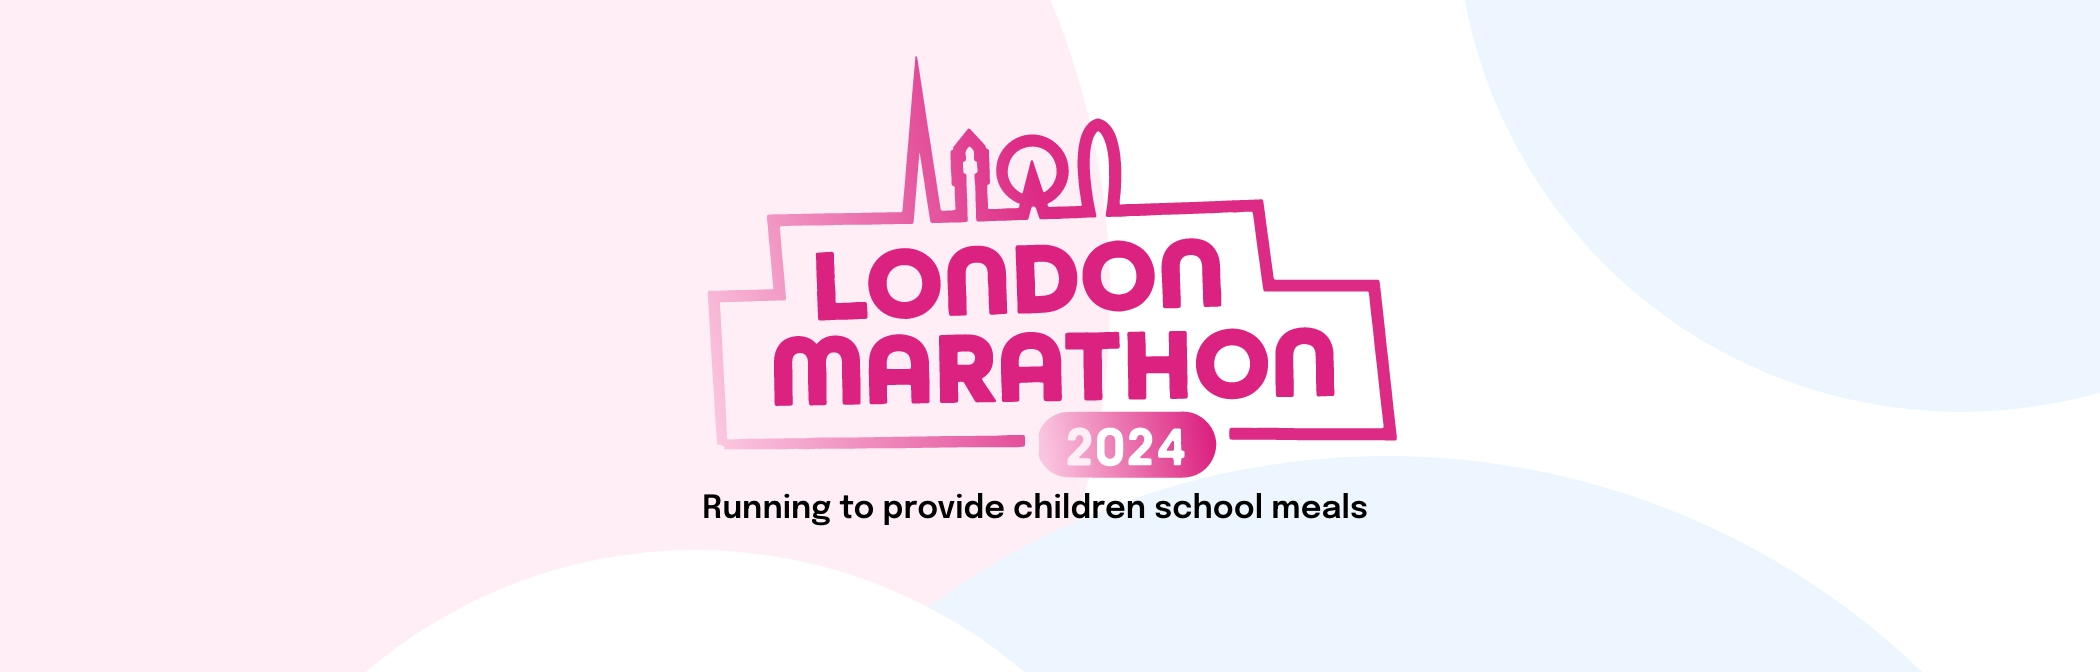 Banner image for Mohammad's London Marathon 2024